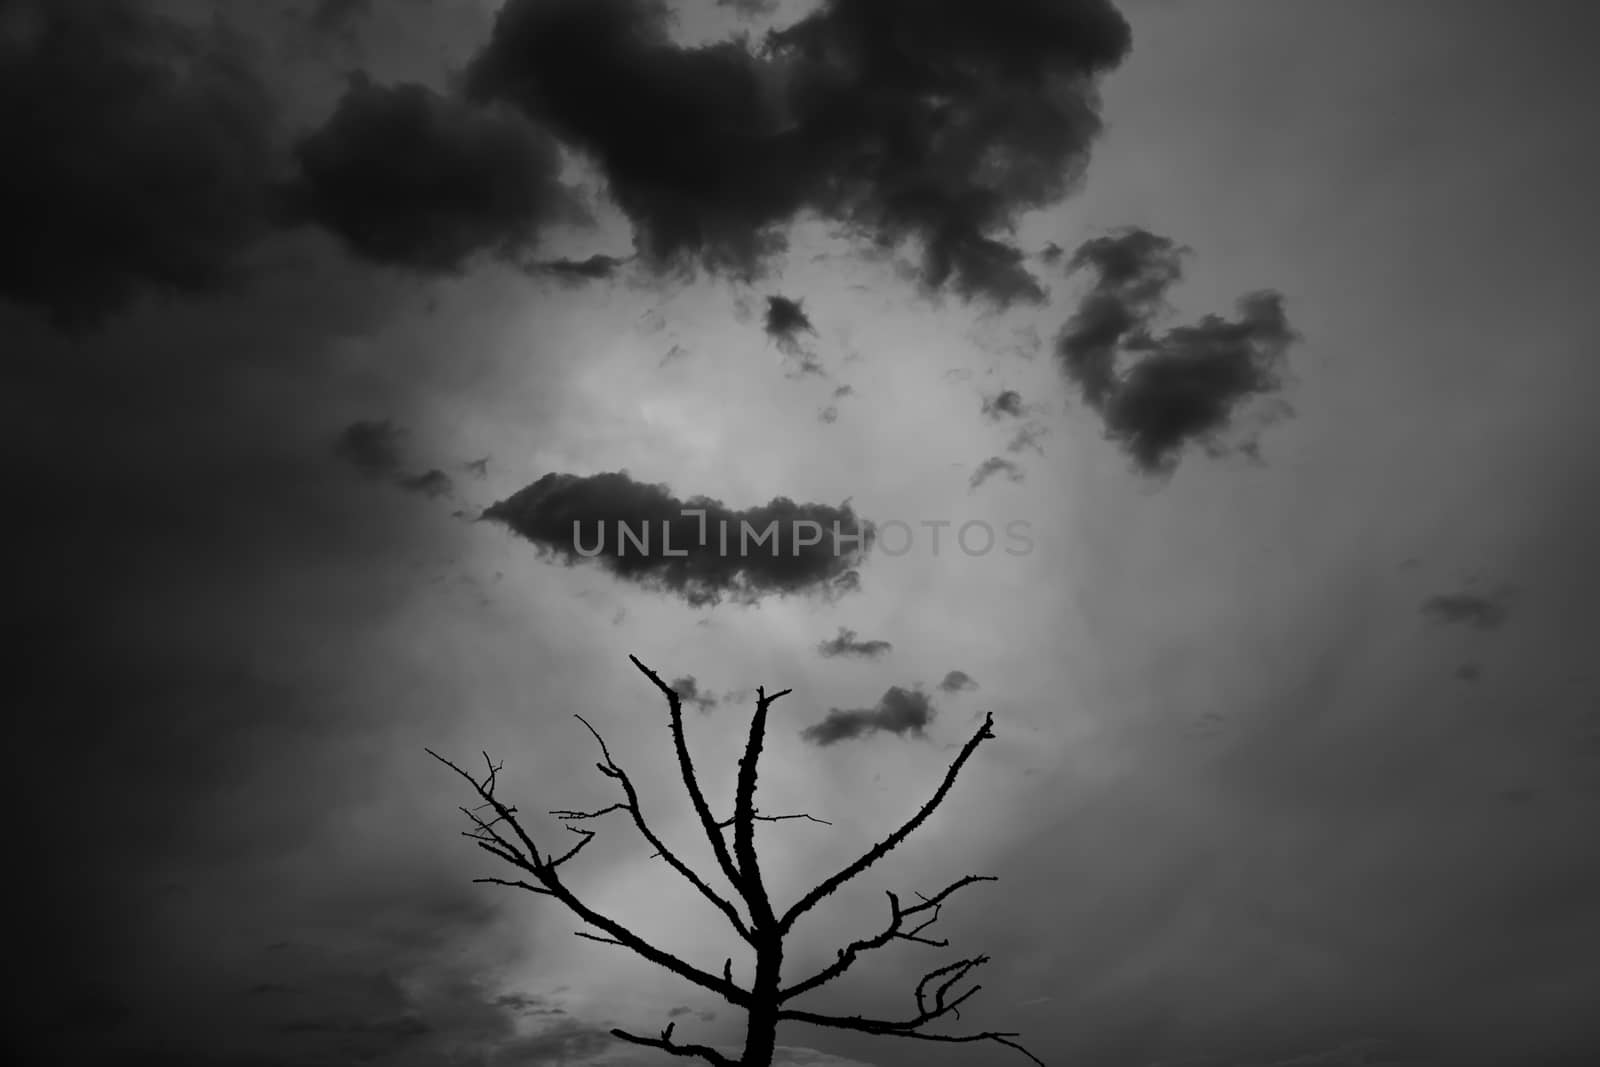 View of a tree silhouette under dark clouds by DamantisZ